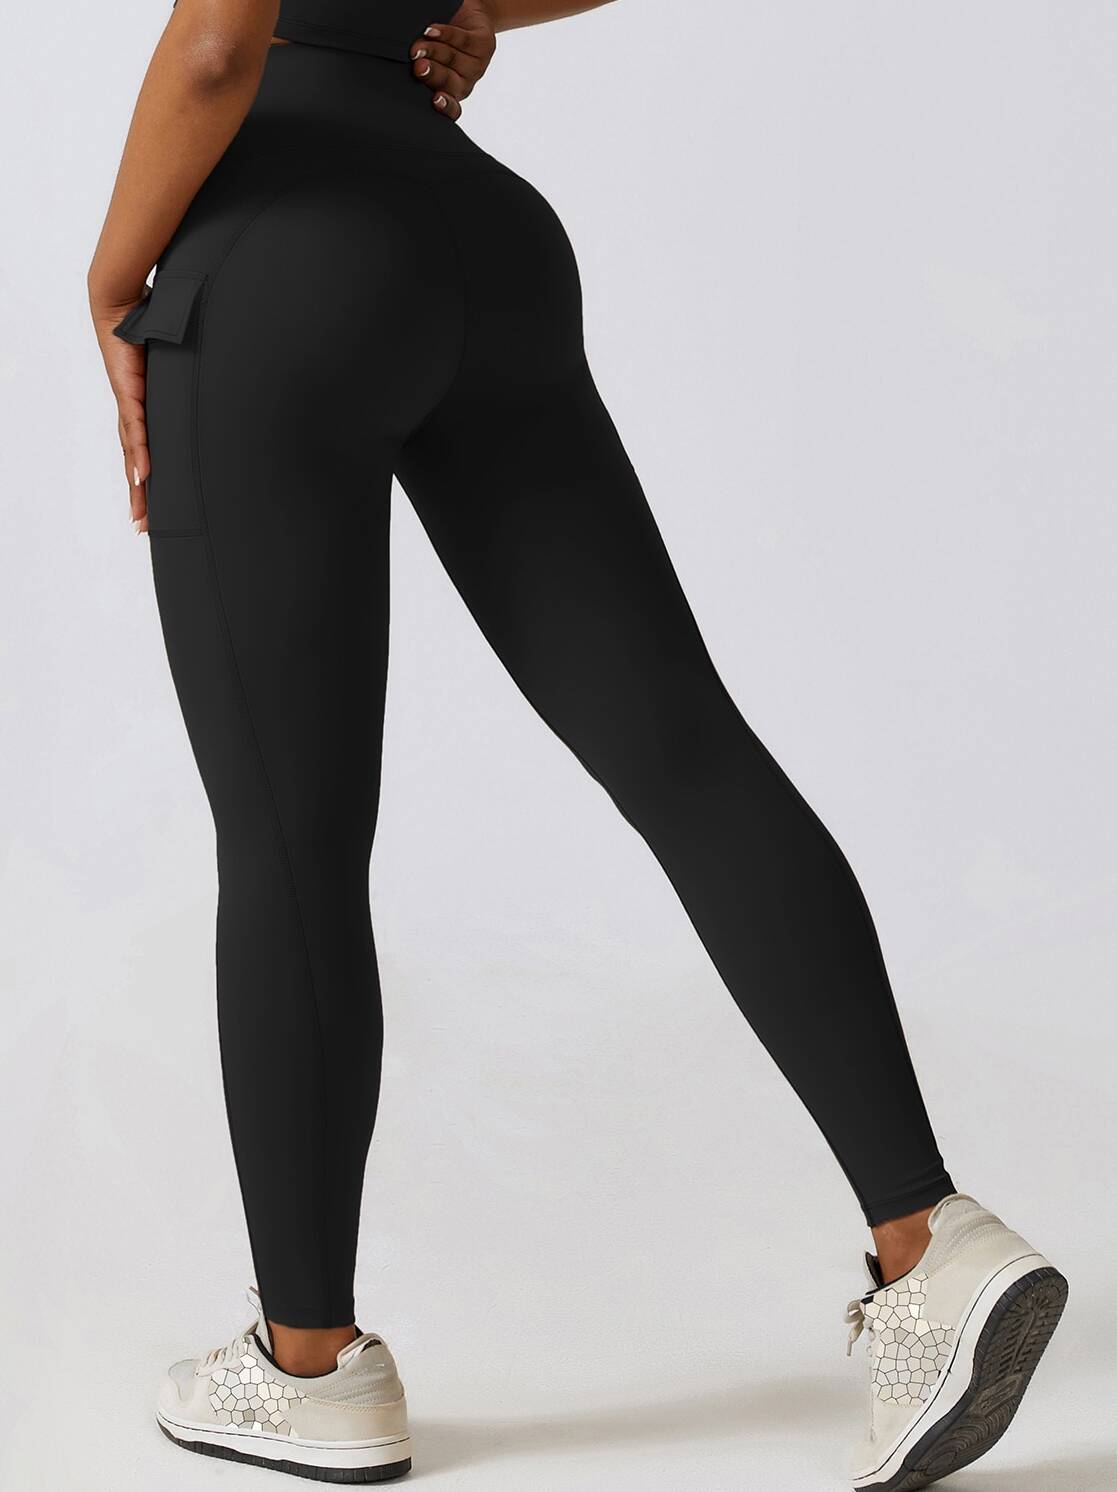 Women's Yoga Pants Yoga Leggings Criss Cross Waist Tummy Control Butt Lift  Quick Dry High Waist Yoga Fitness Gym Workout Leggings Bottoms Black Dark N